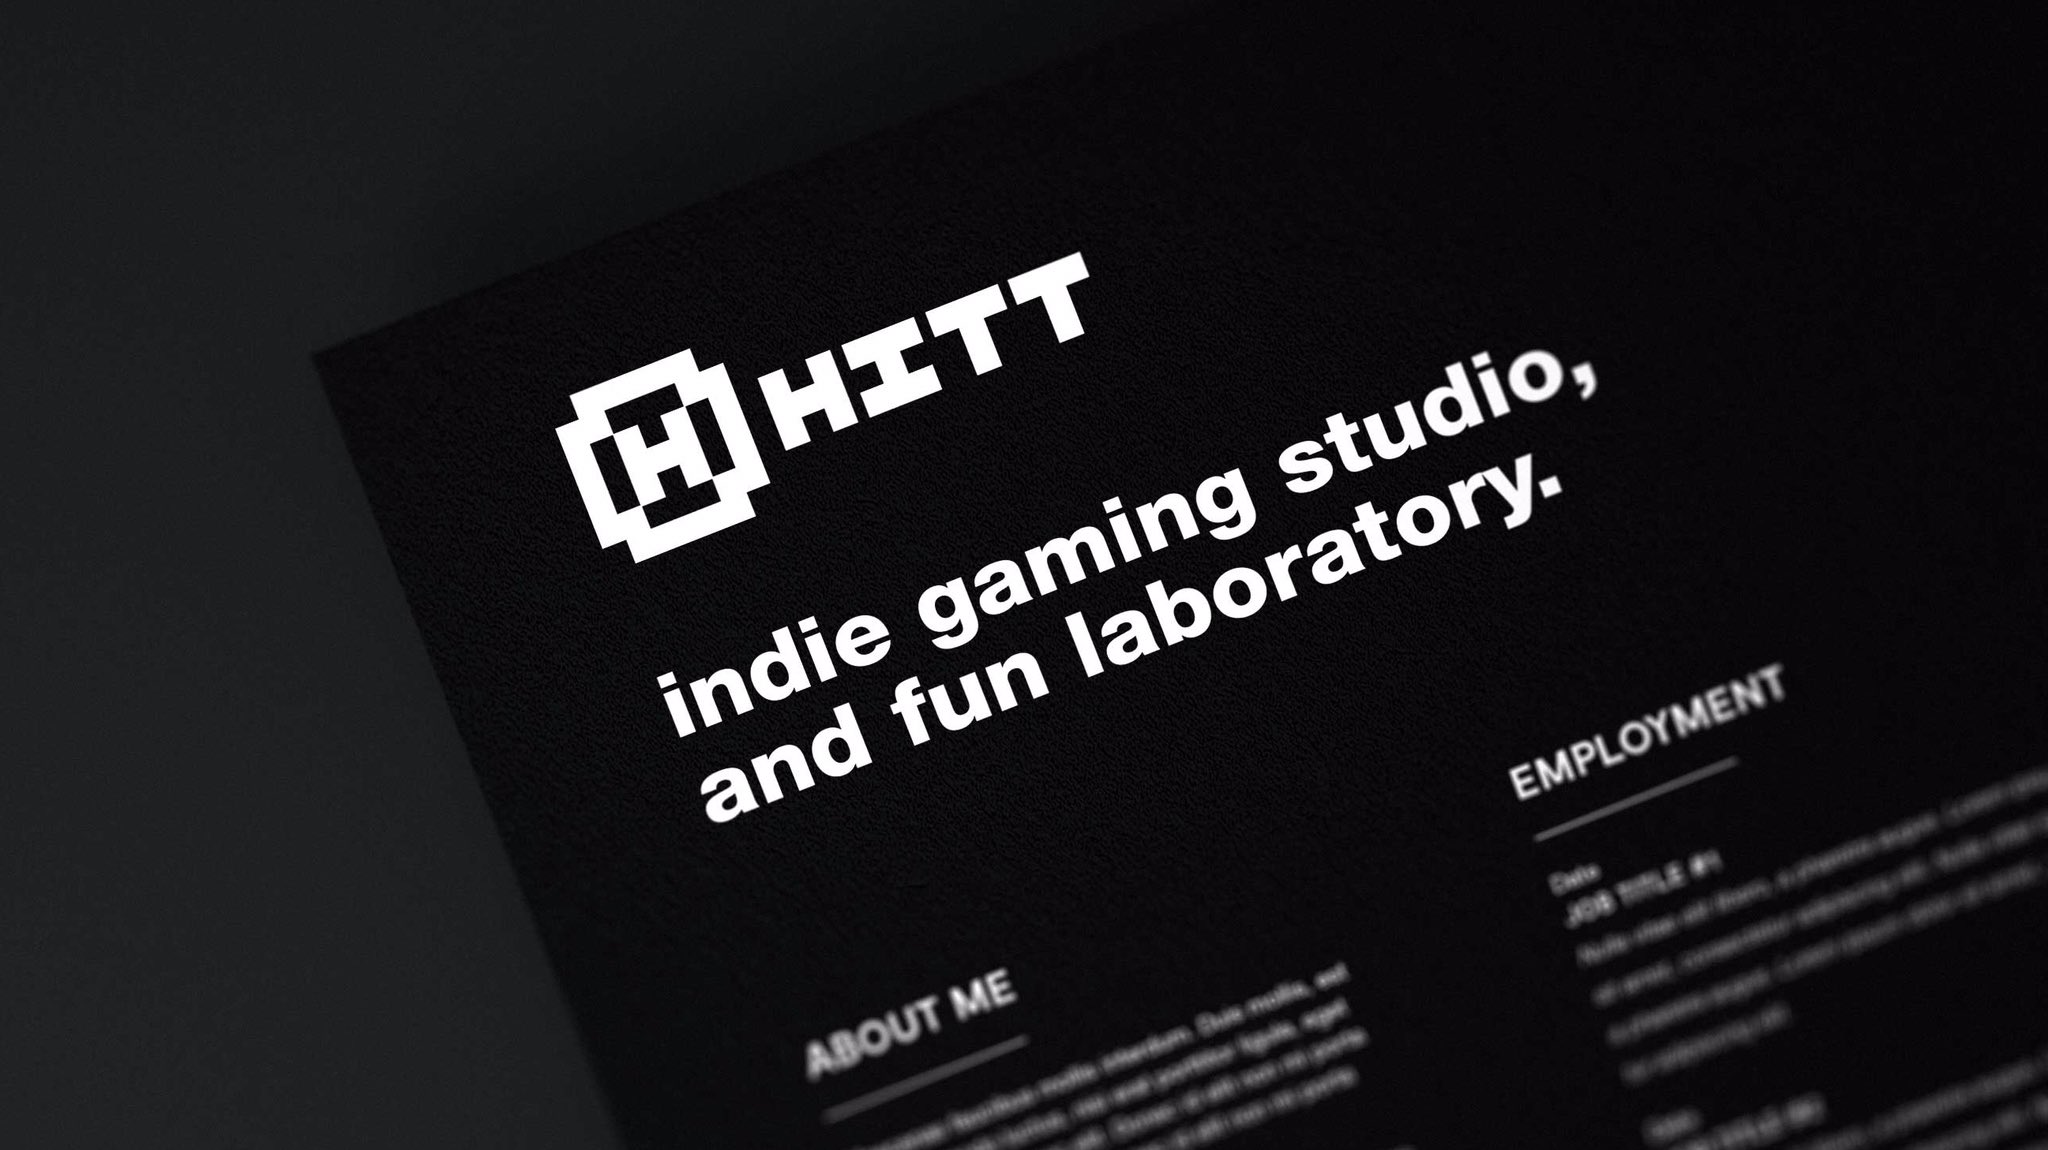 HITT Indie Game Studio Logo Icon and-Brand Identity Design by The Logo Smith